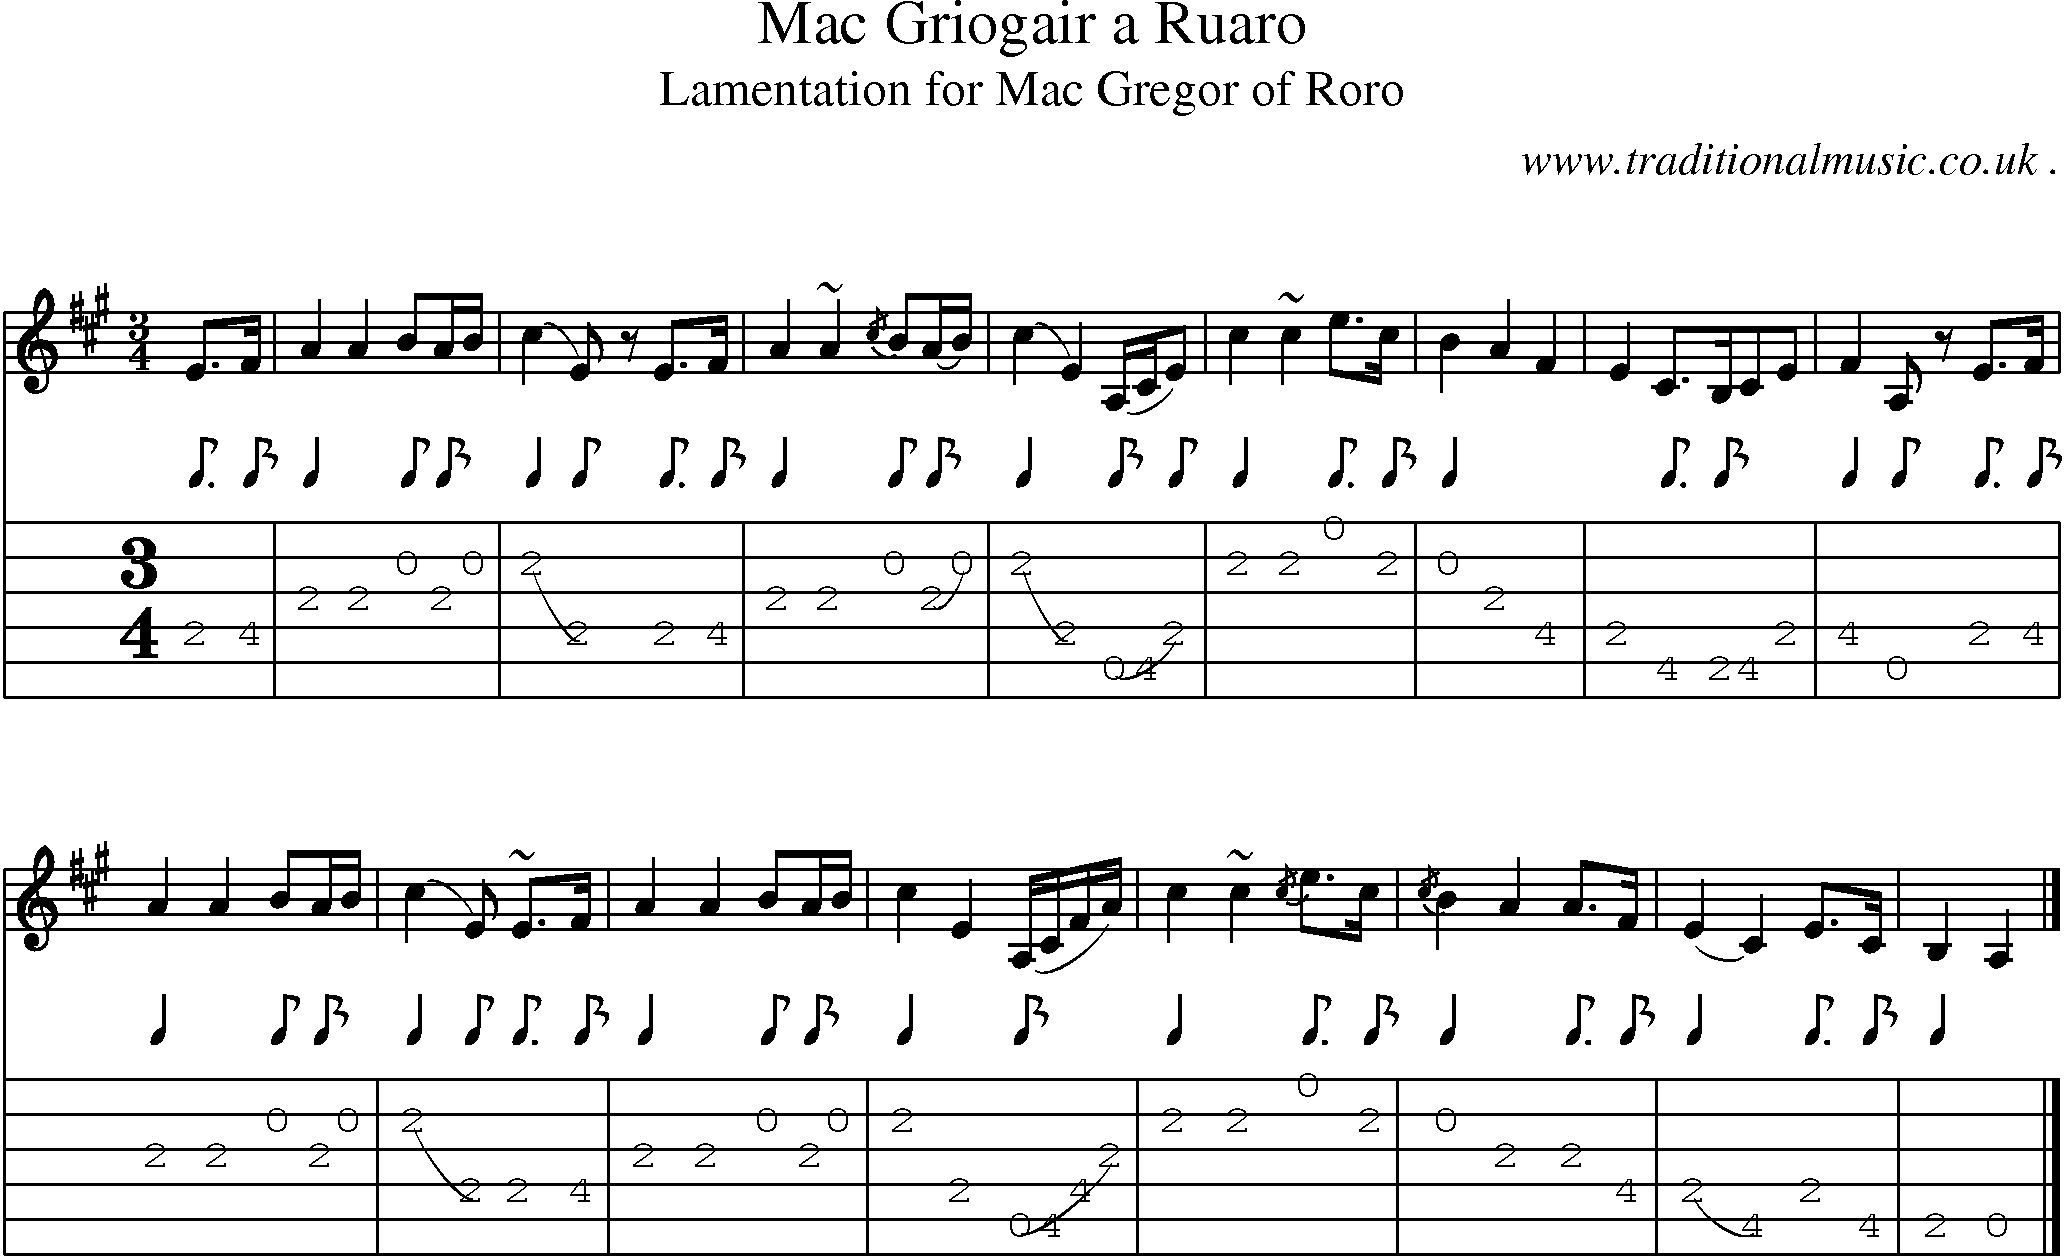 Sheet-music  score, Chords and Guitar Tabs for Mac Griogair A Ruaro